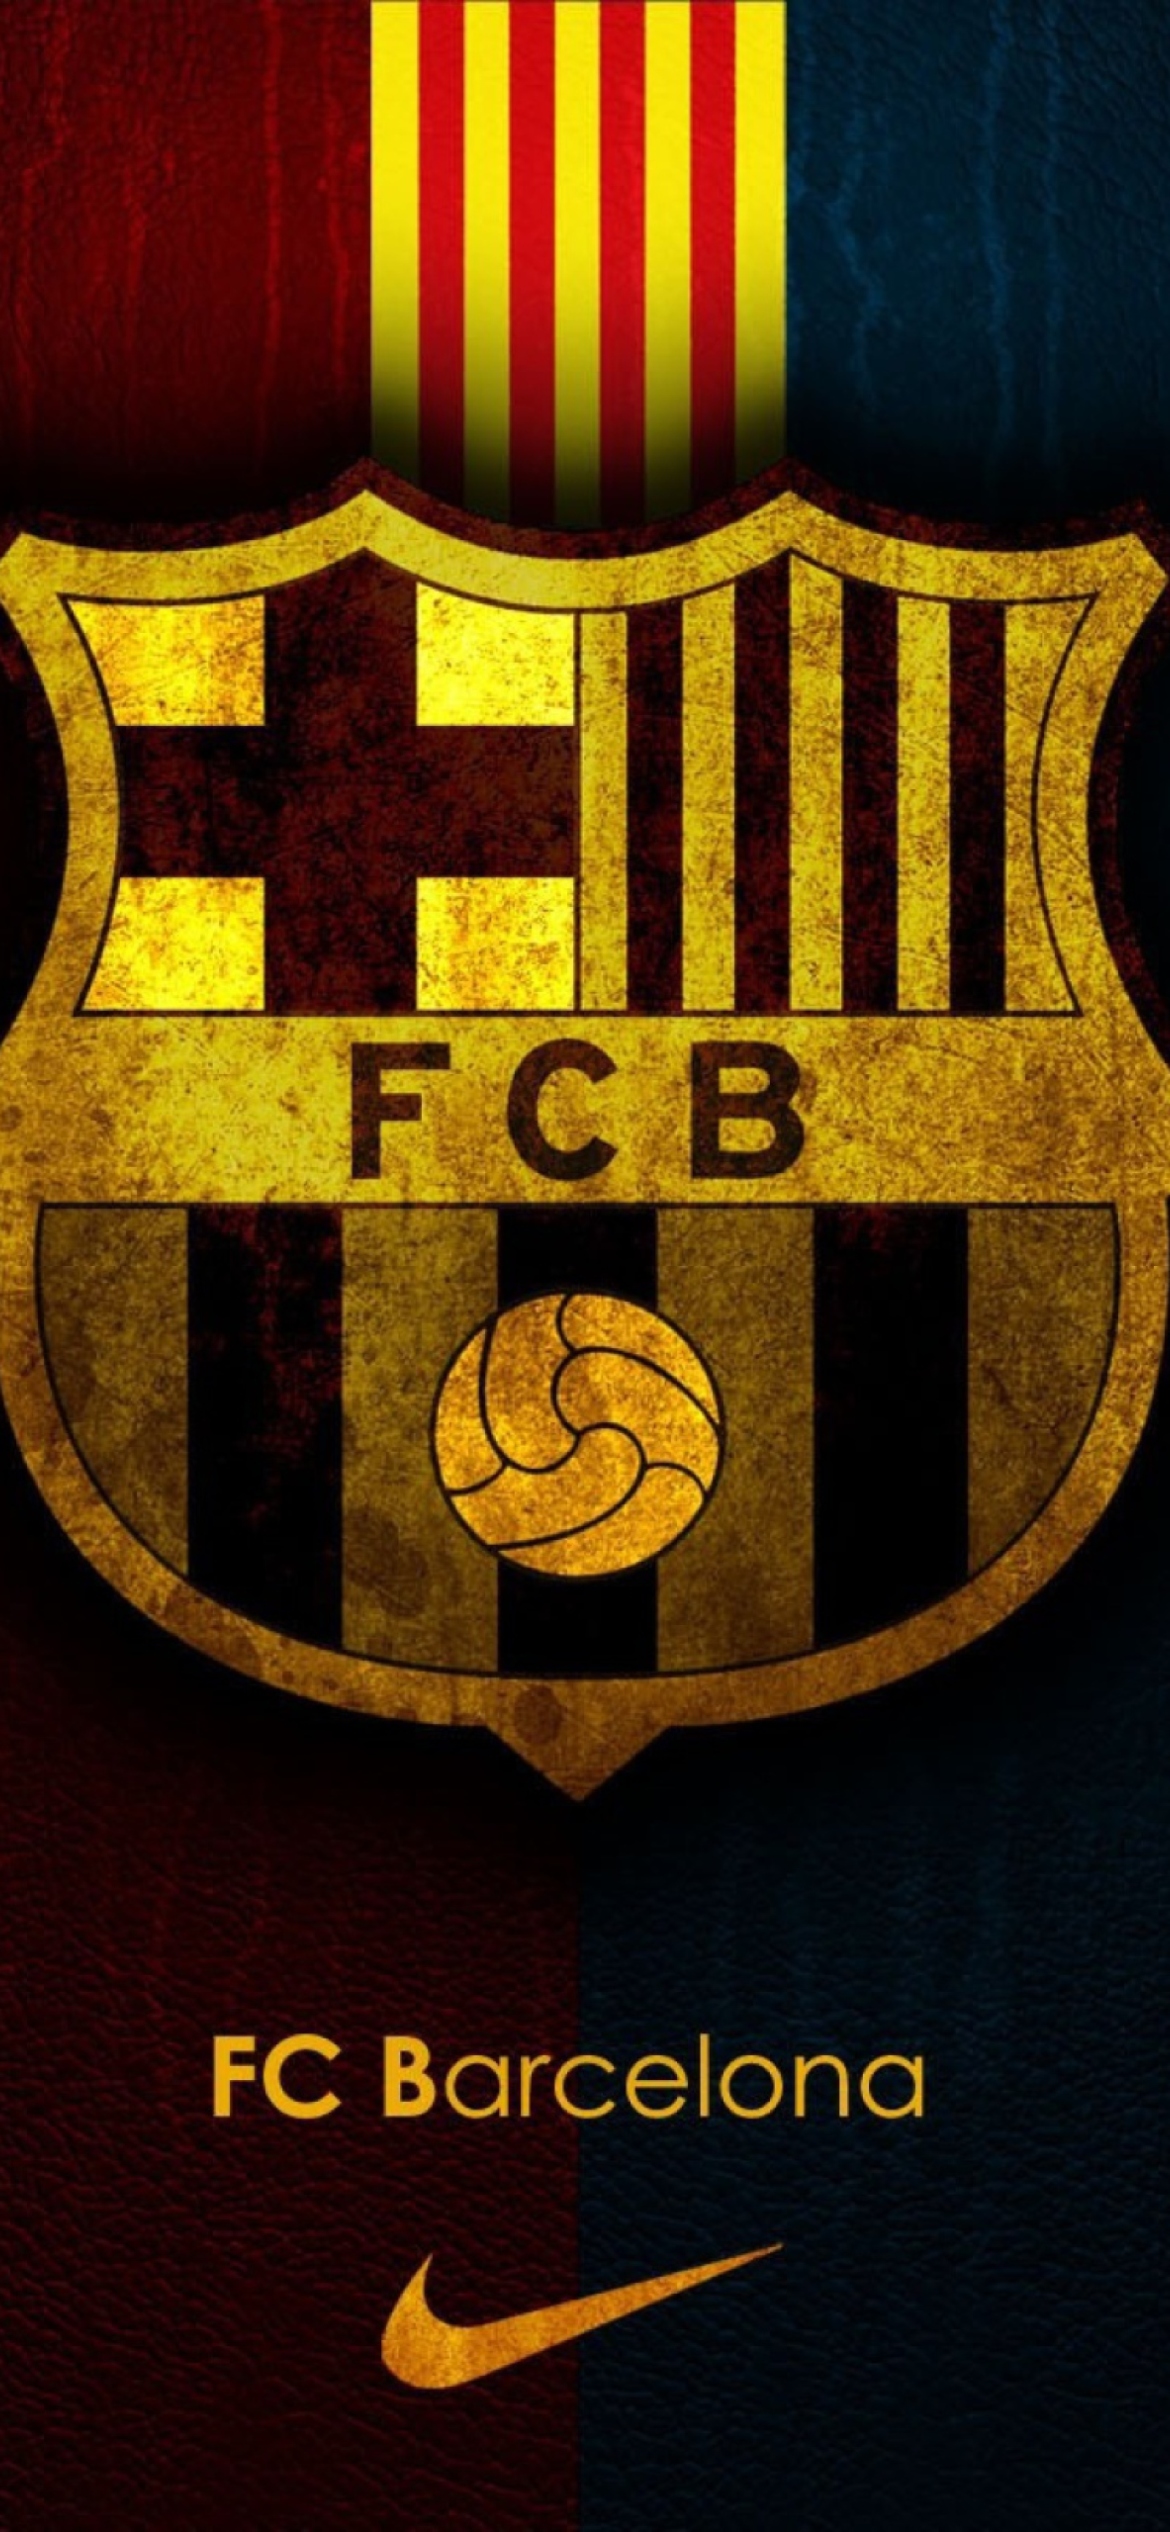 Barcelona Football Club wallpaper 1170x2532